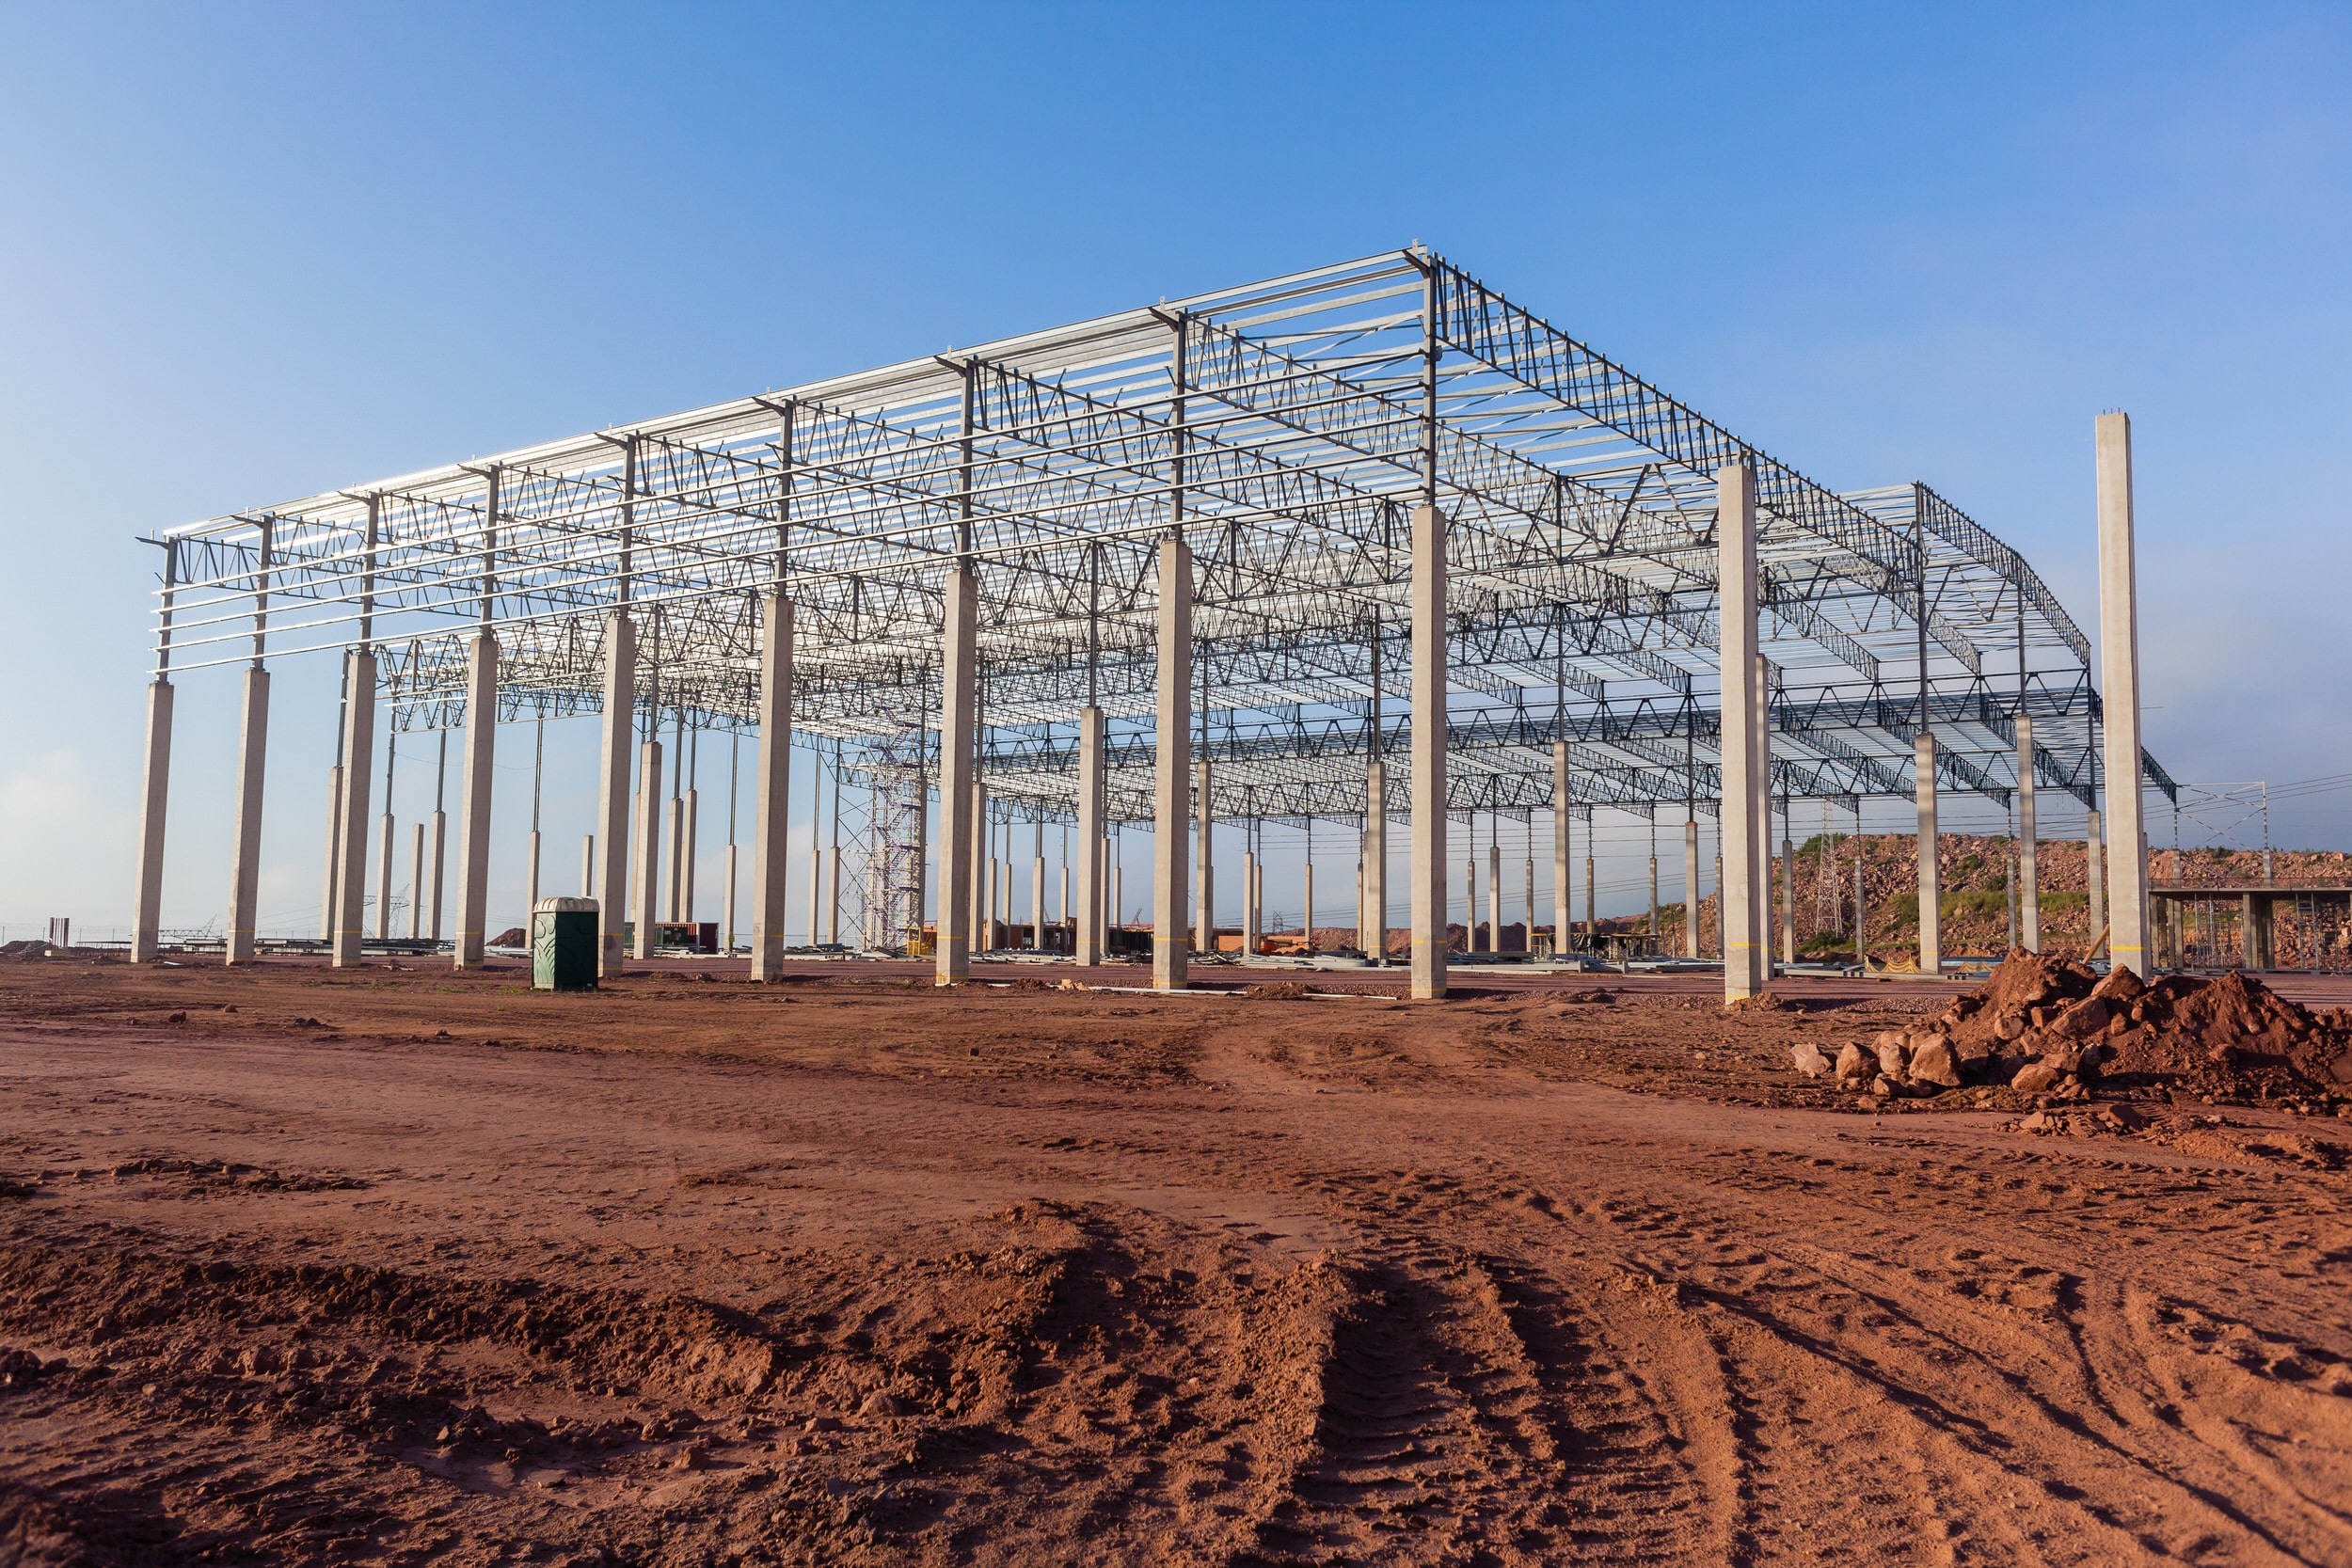 Building new large warehouse construction halfway concrete columns steel roofing beams structure landscape.